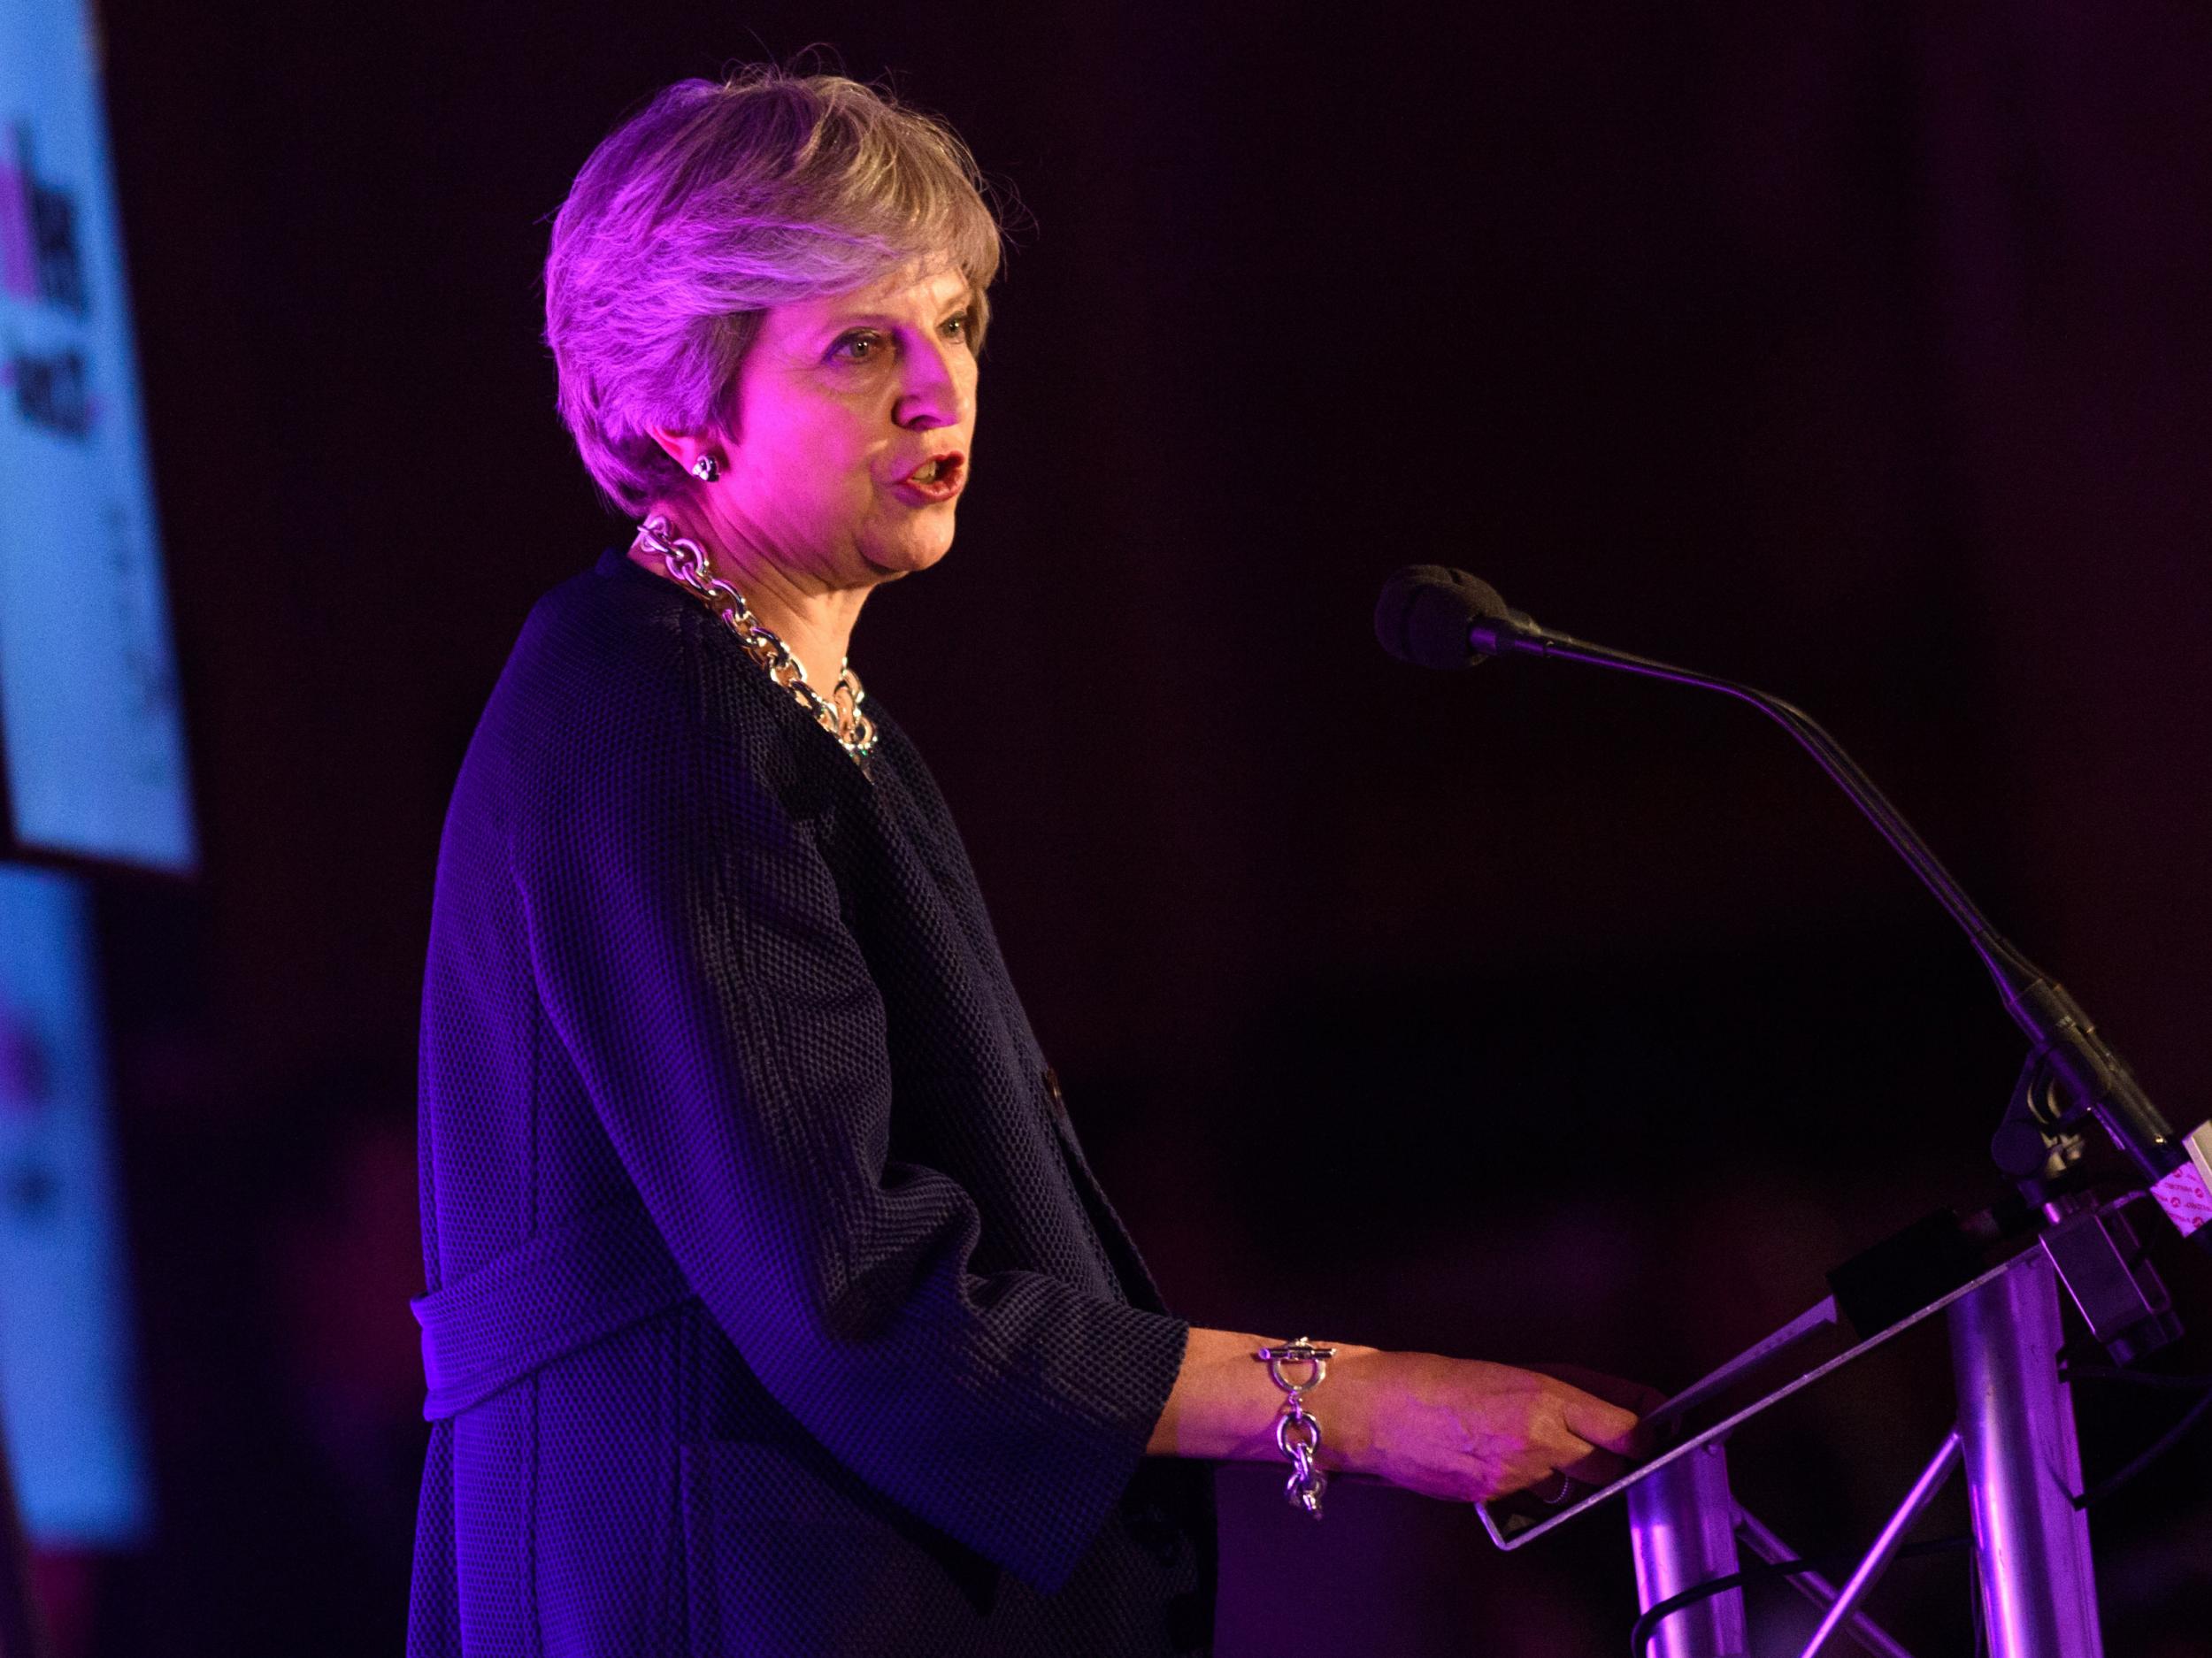 Theresa May at the Pink News awards held at One Great George Street